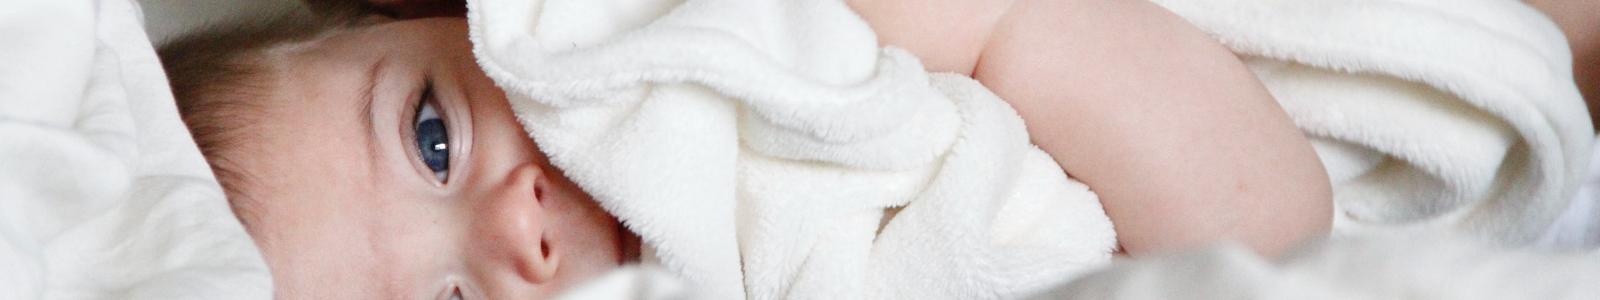 Hygiene Sets, High - Quality Hygiene Babycare